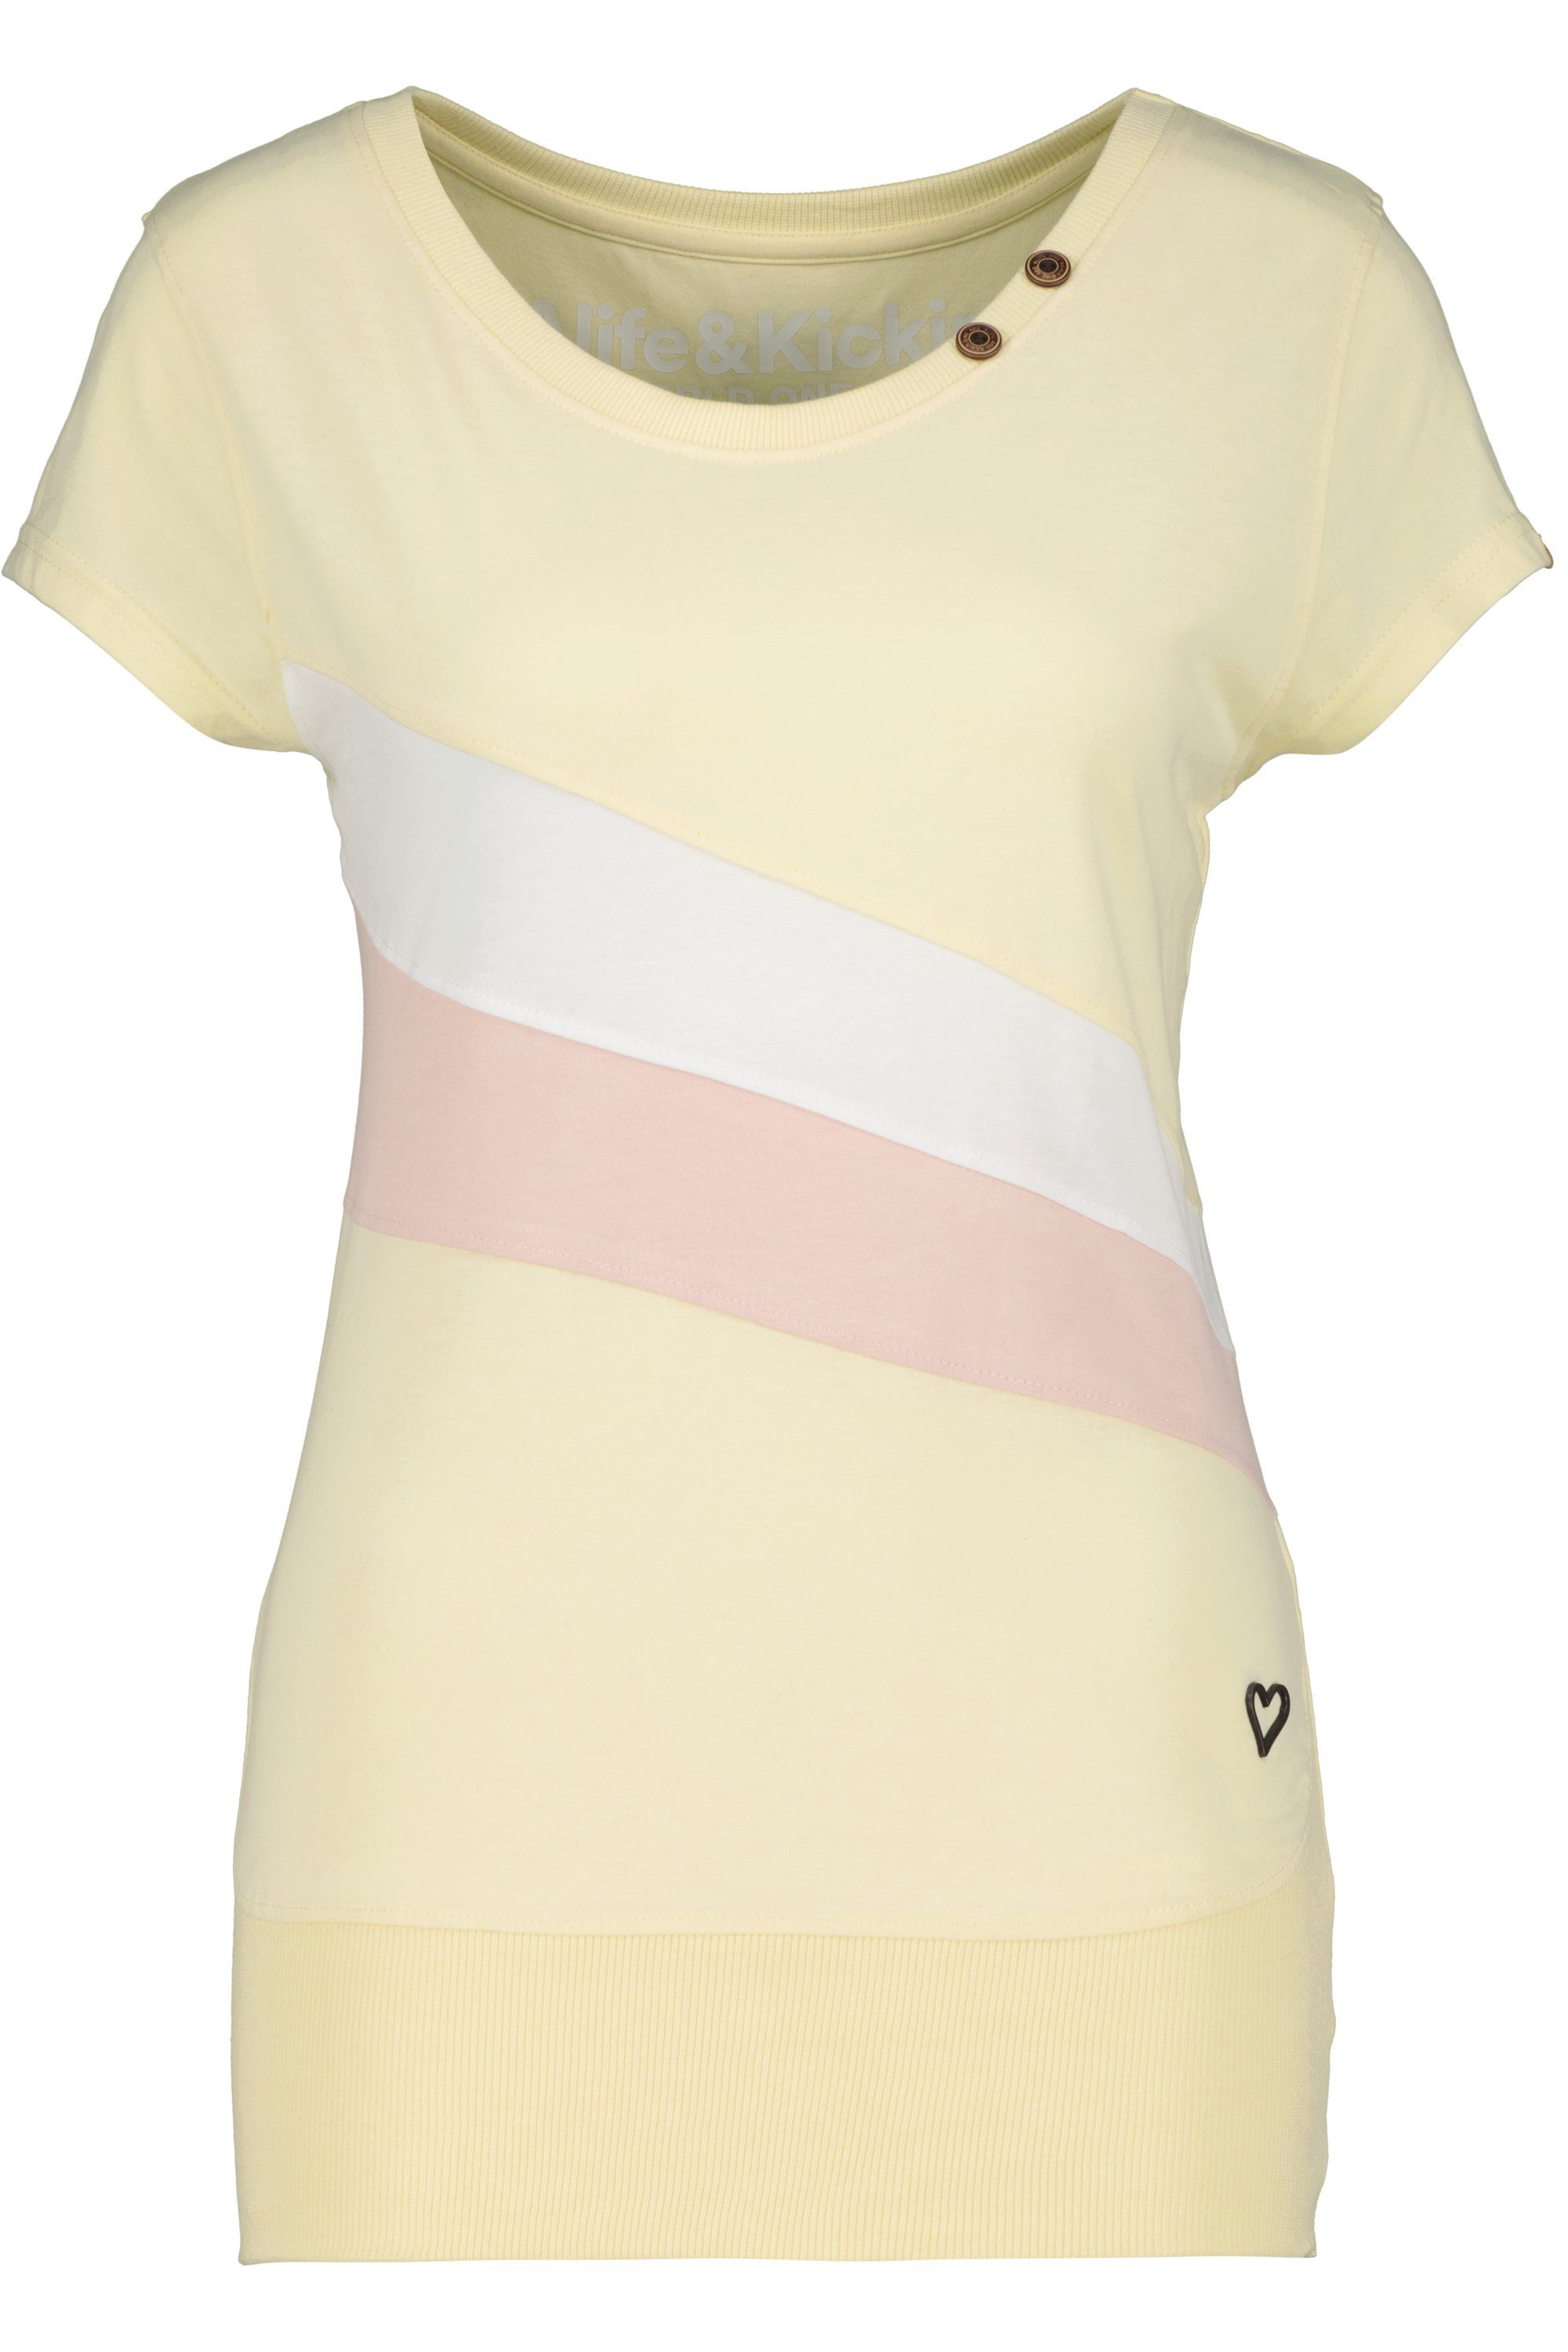 Shirt Alife Damen melange CleaAK T-Shirt & A creme T-Shirt Kickin